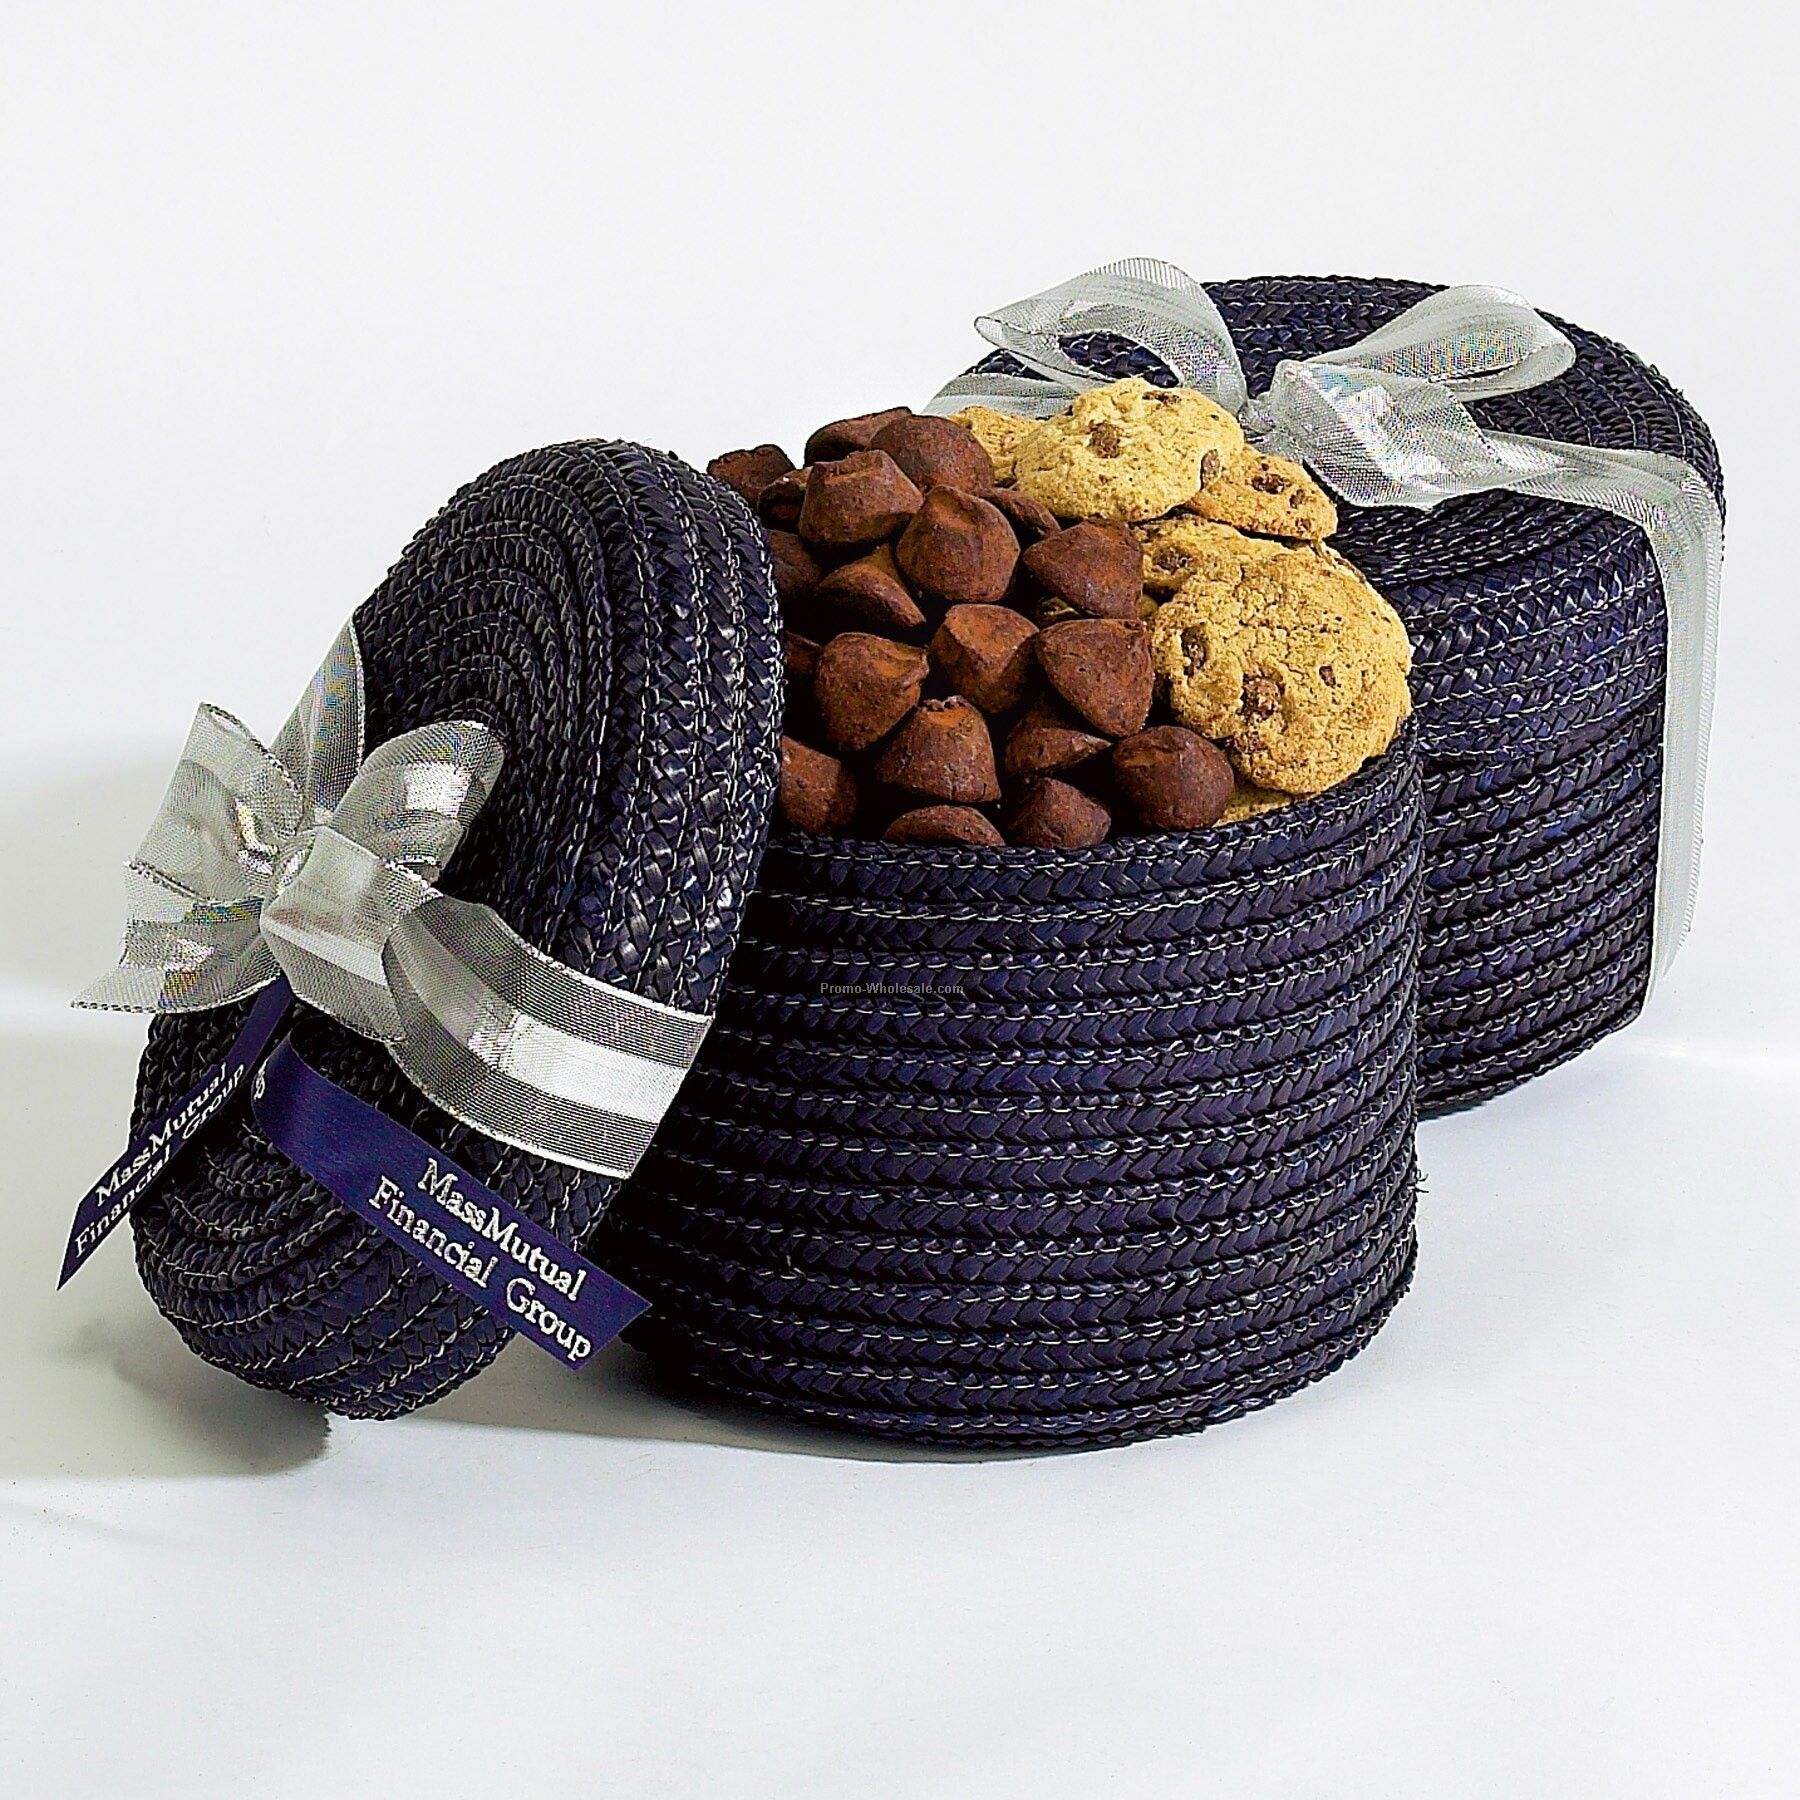 Sweets Galore Lidded Gift Basket